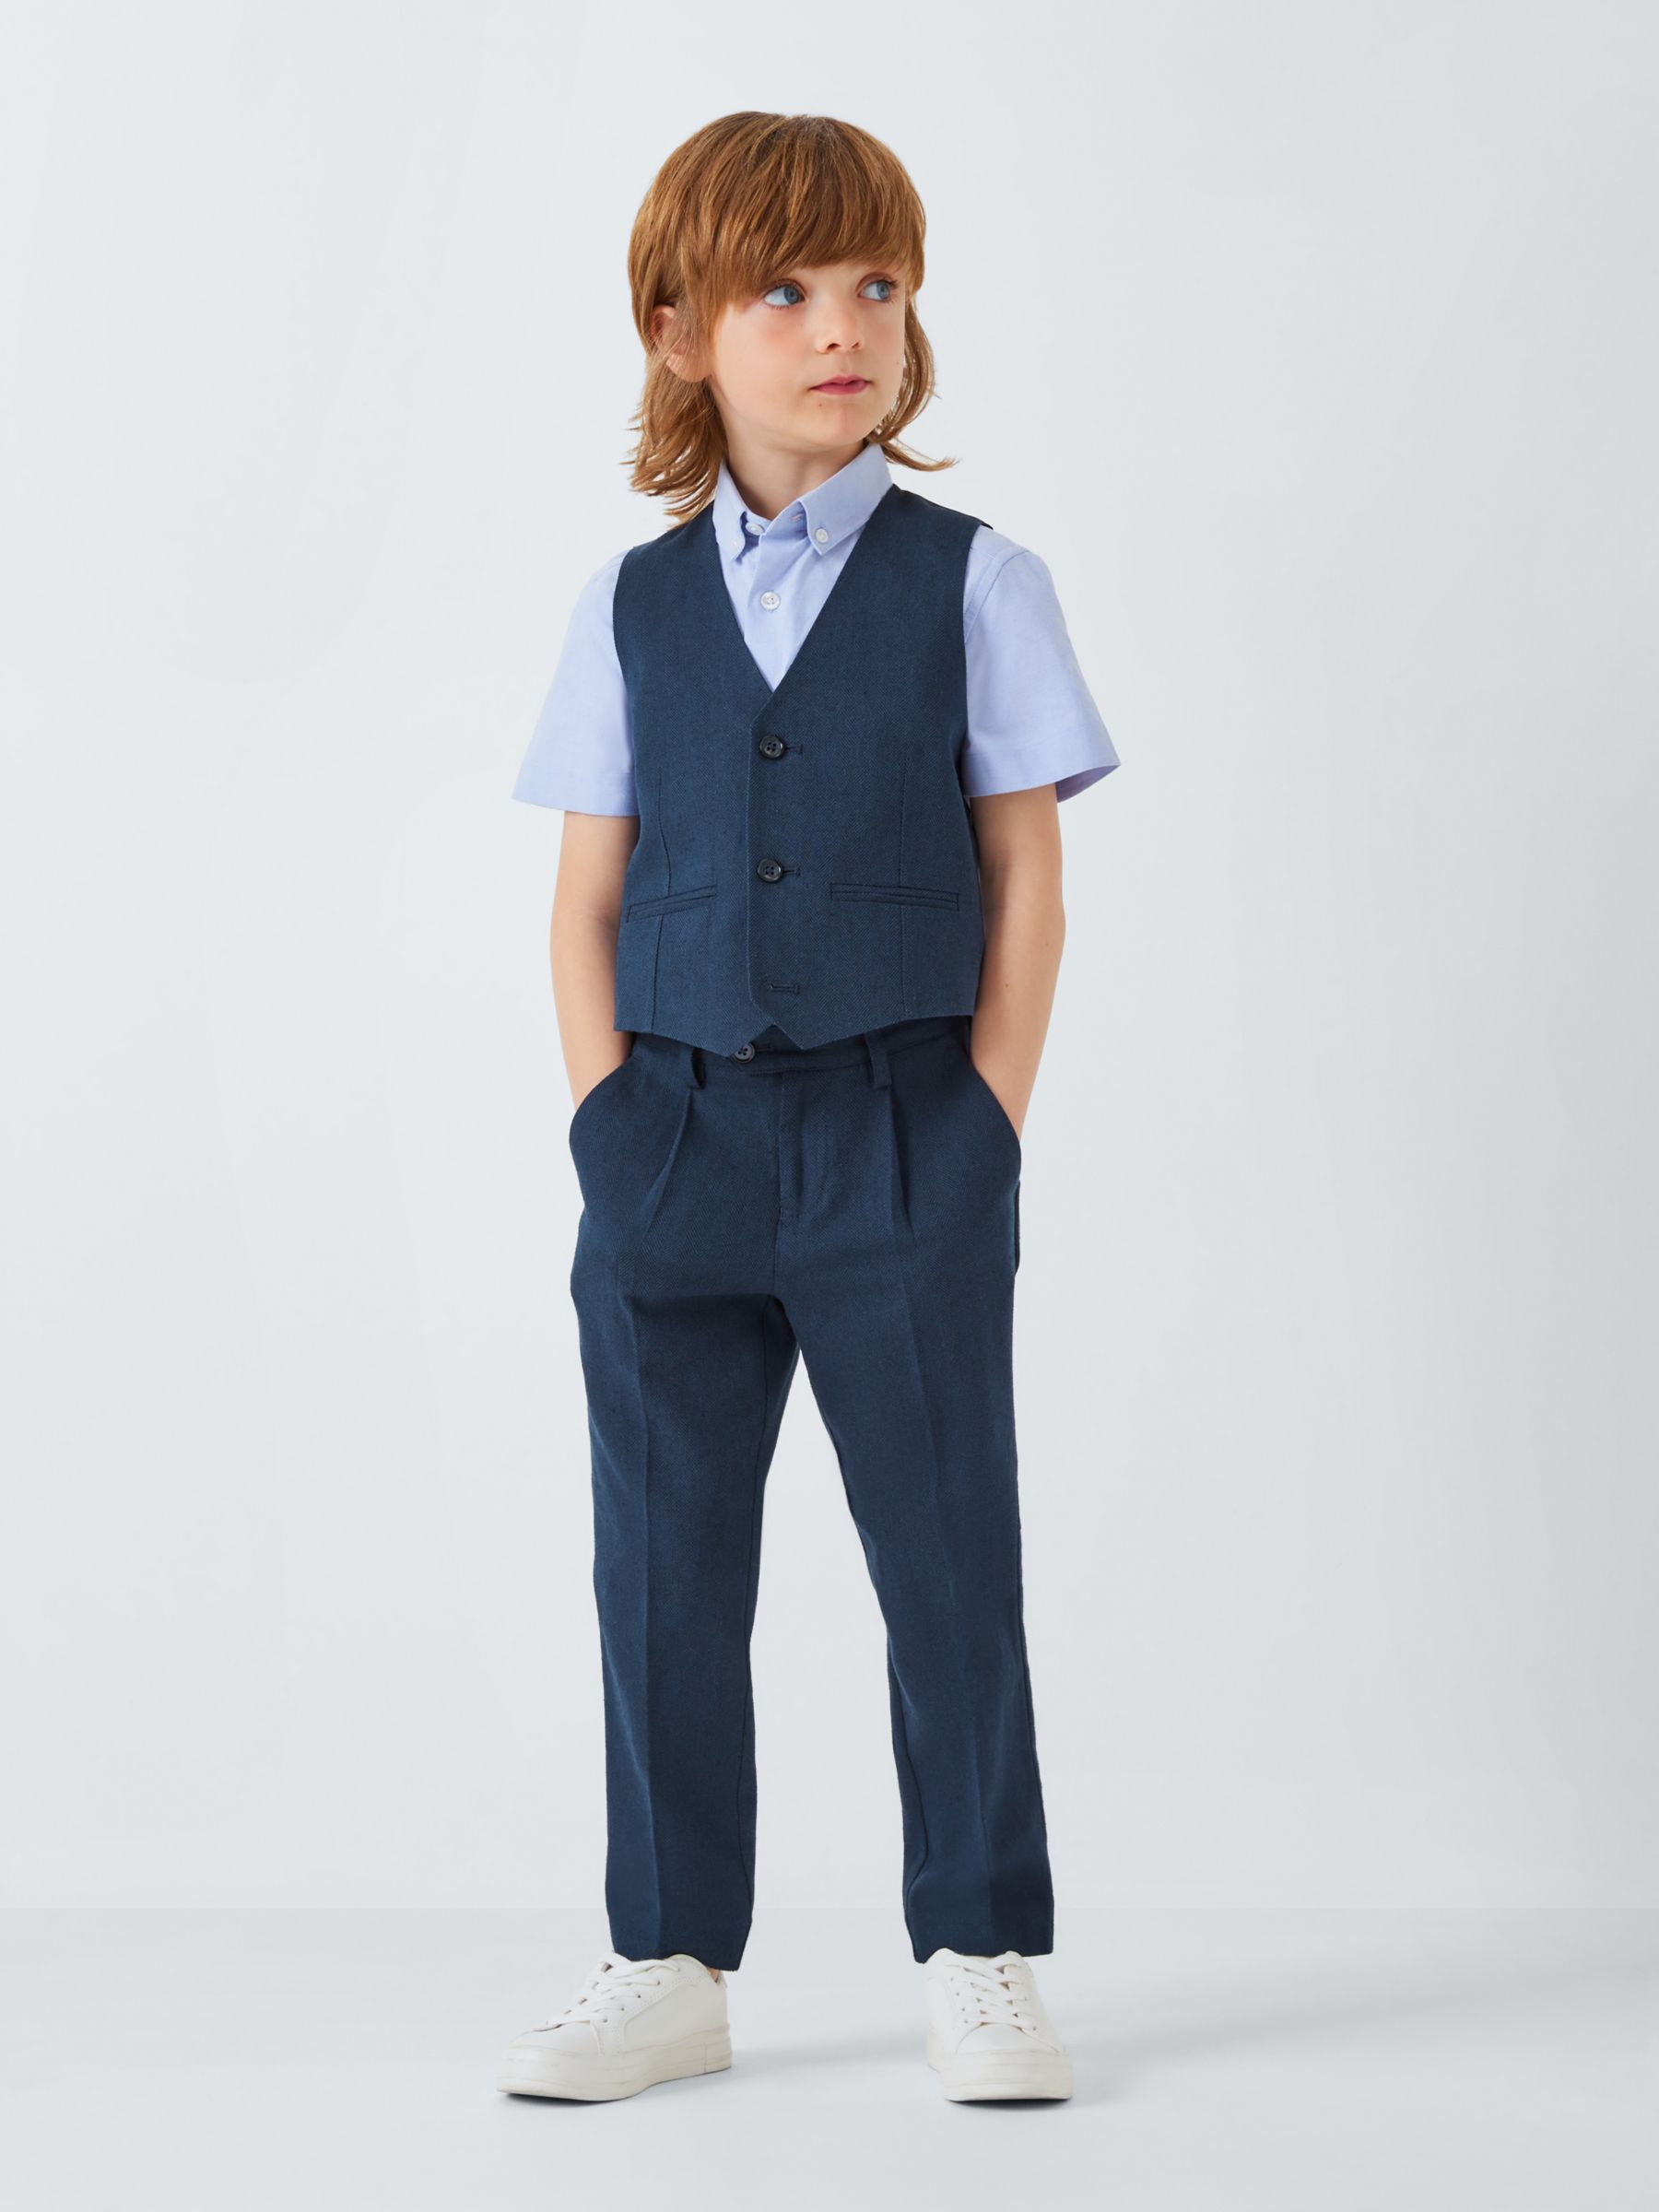 John Lewis Heirloom Collection Kids' Linen Blend Waistcoat, Navy, 3 years